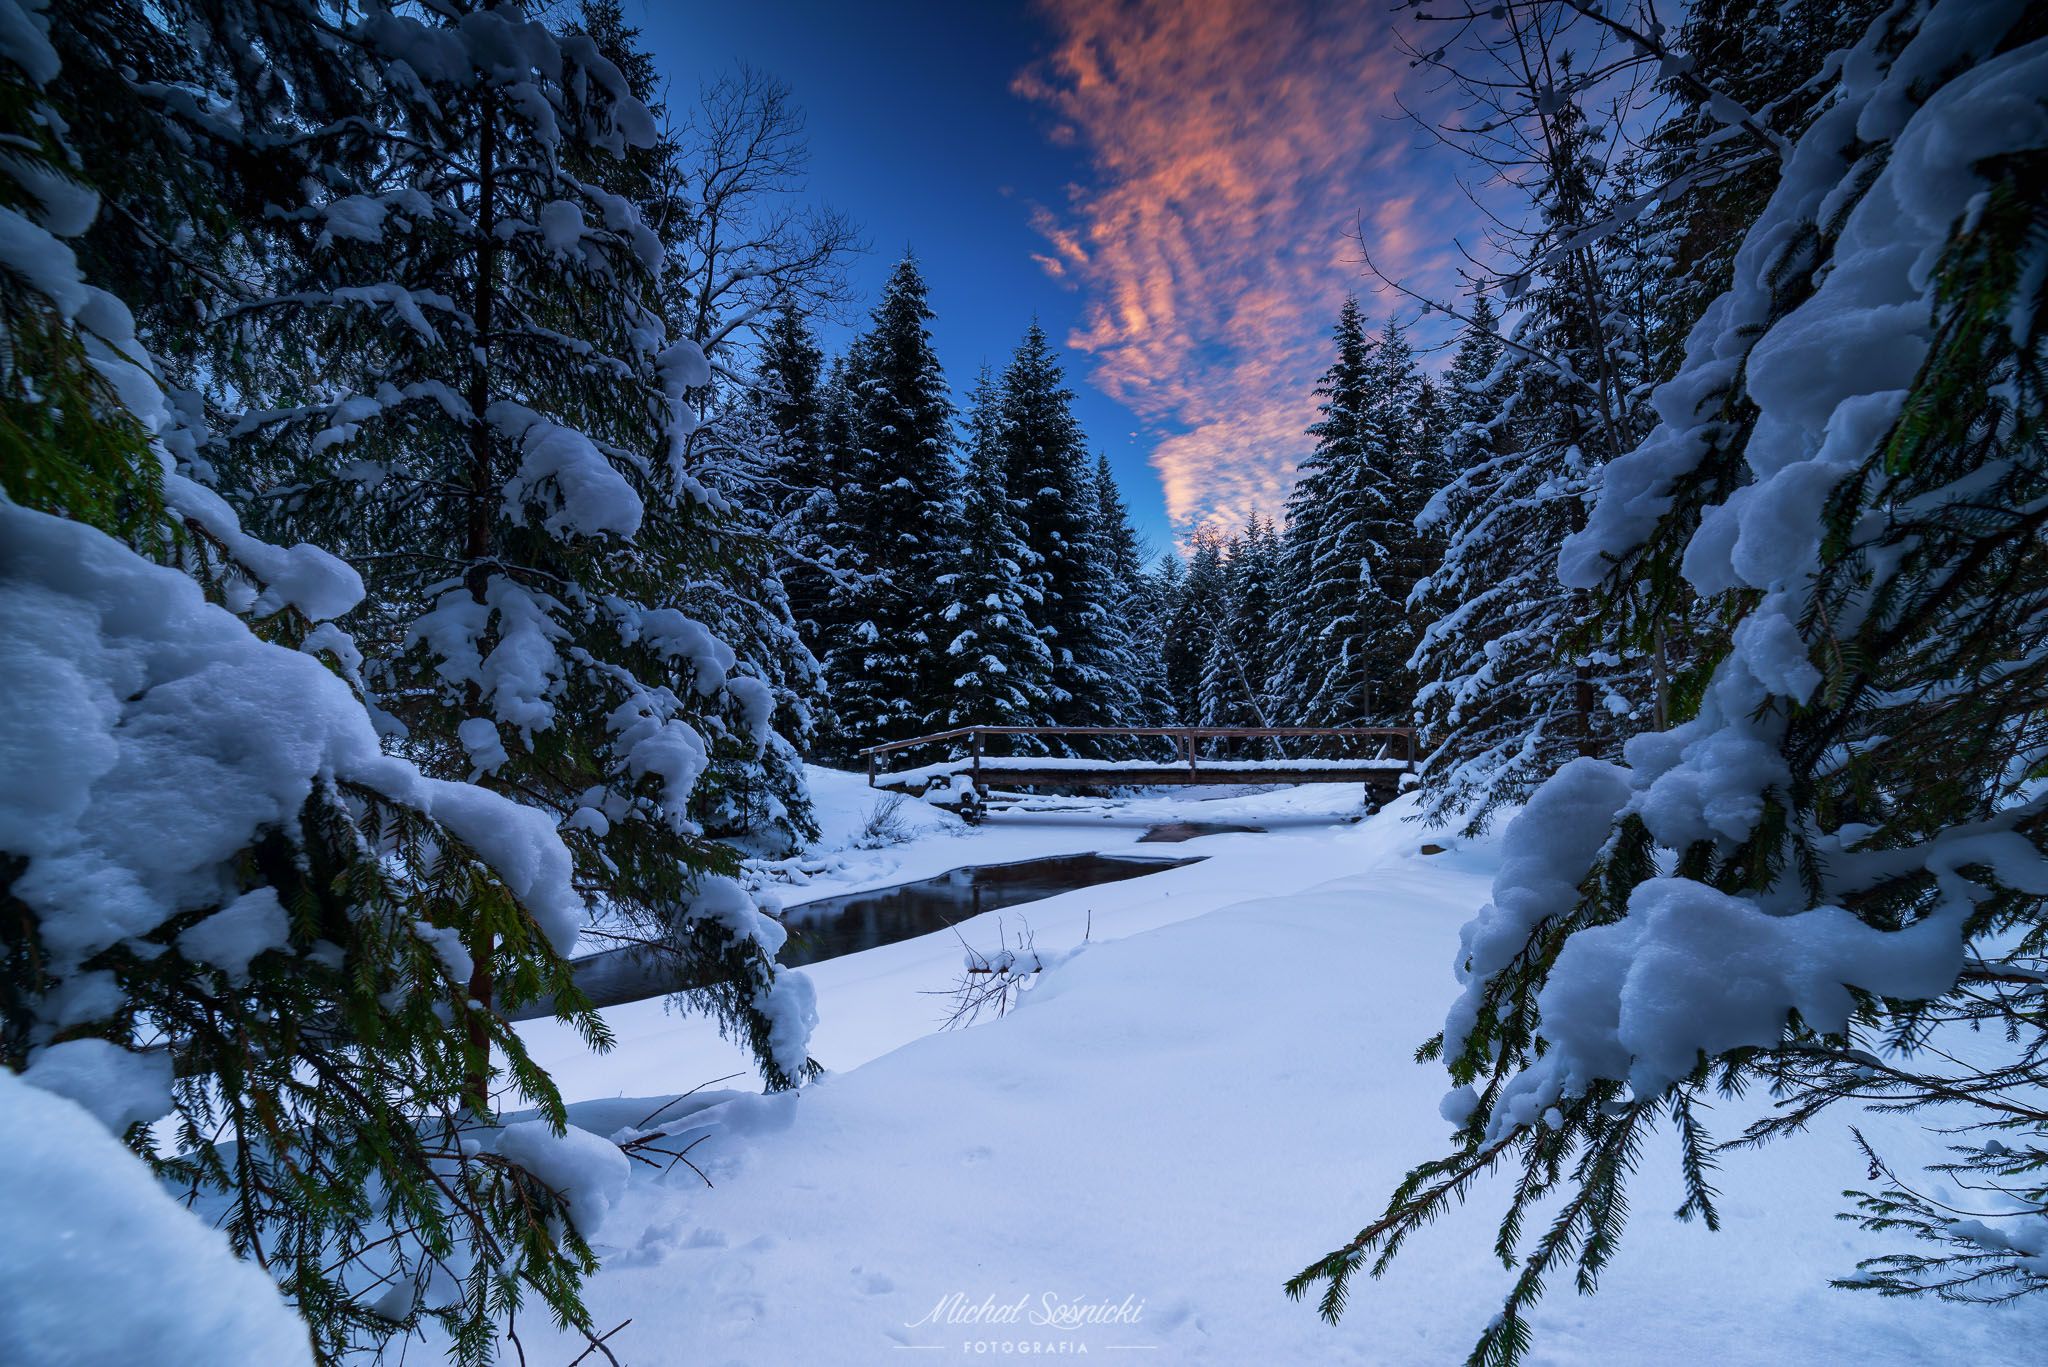 #poland #zawoja #winter #snow #trees #water #sky #fish #stream #benro #benq #pentax, Michał Sośnicki